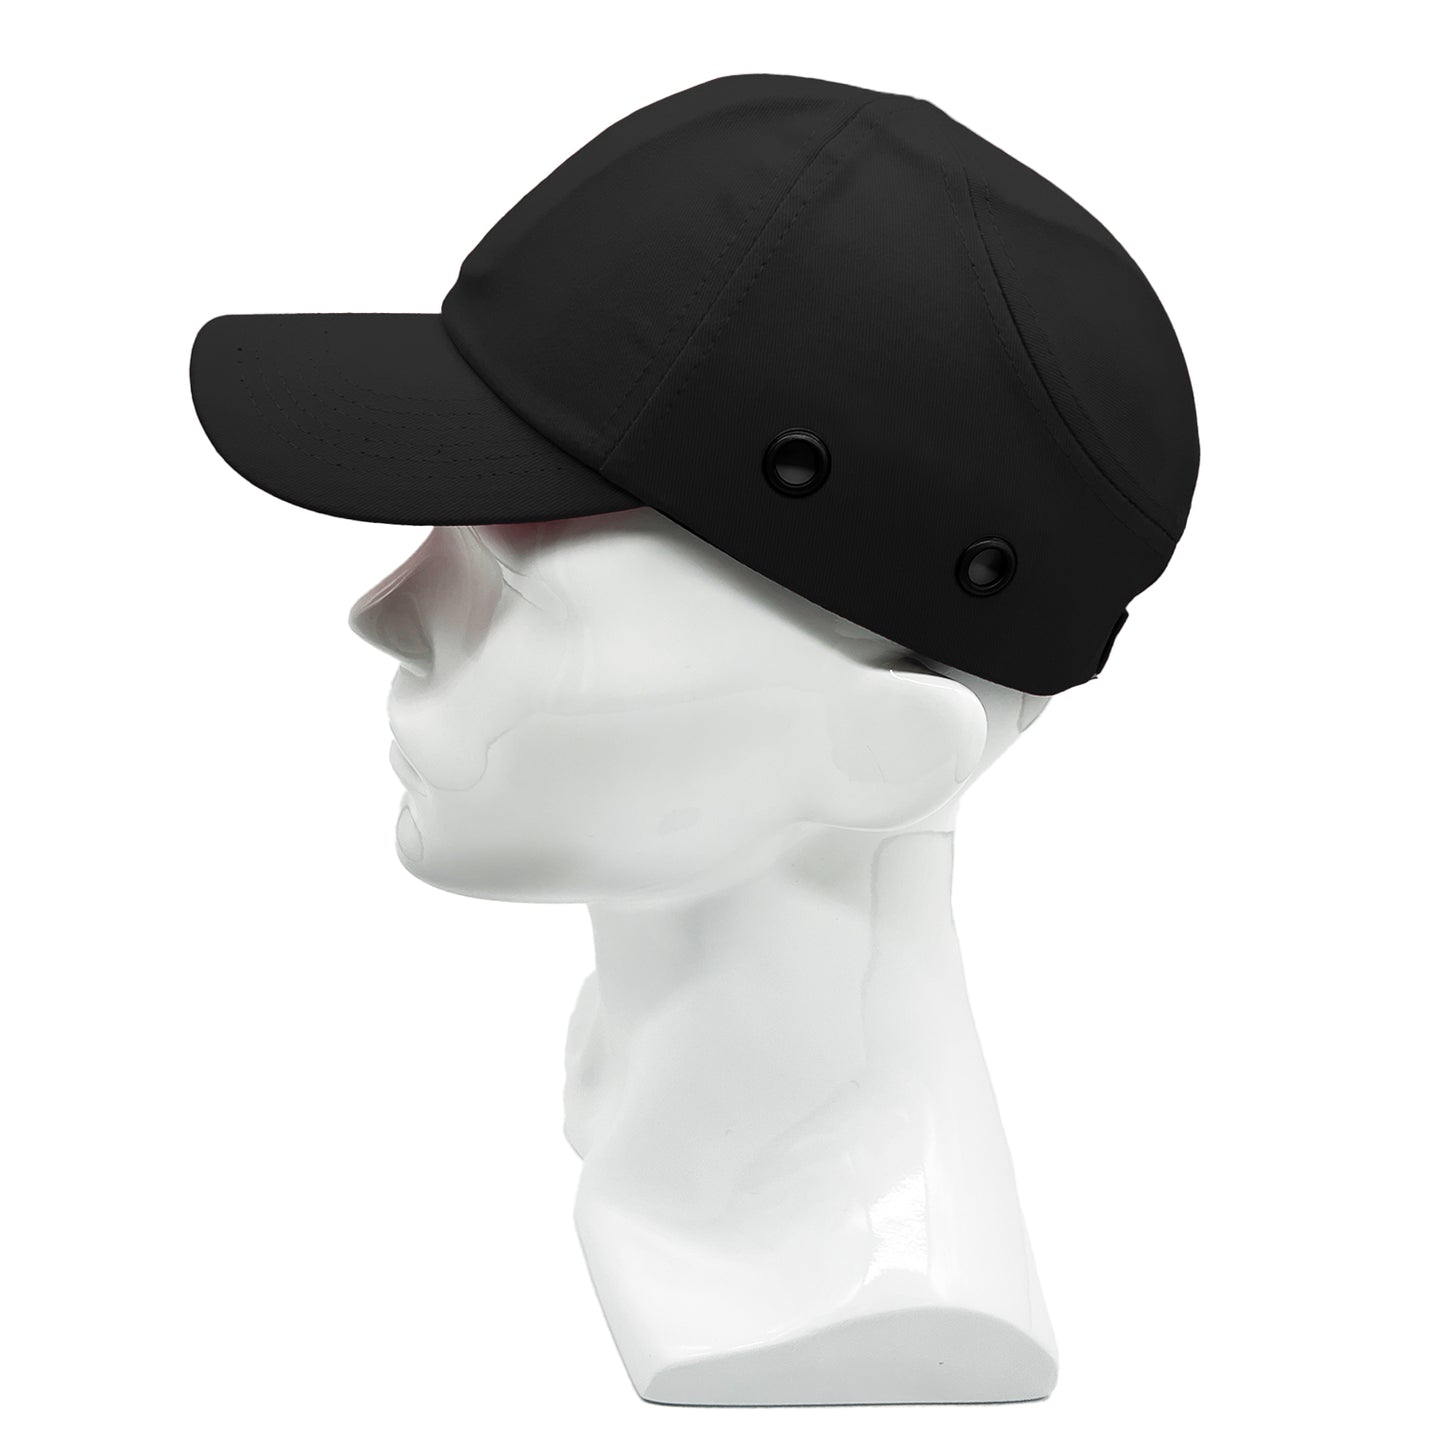 Value Bundles - Black Baseball Bump Caps + Flip Up Face Shield